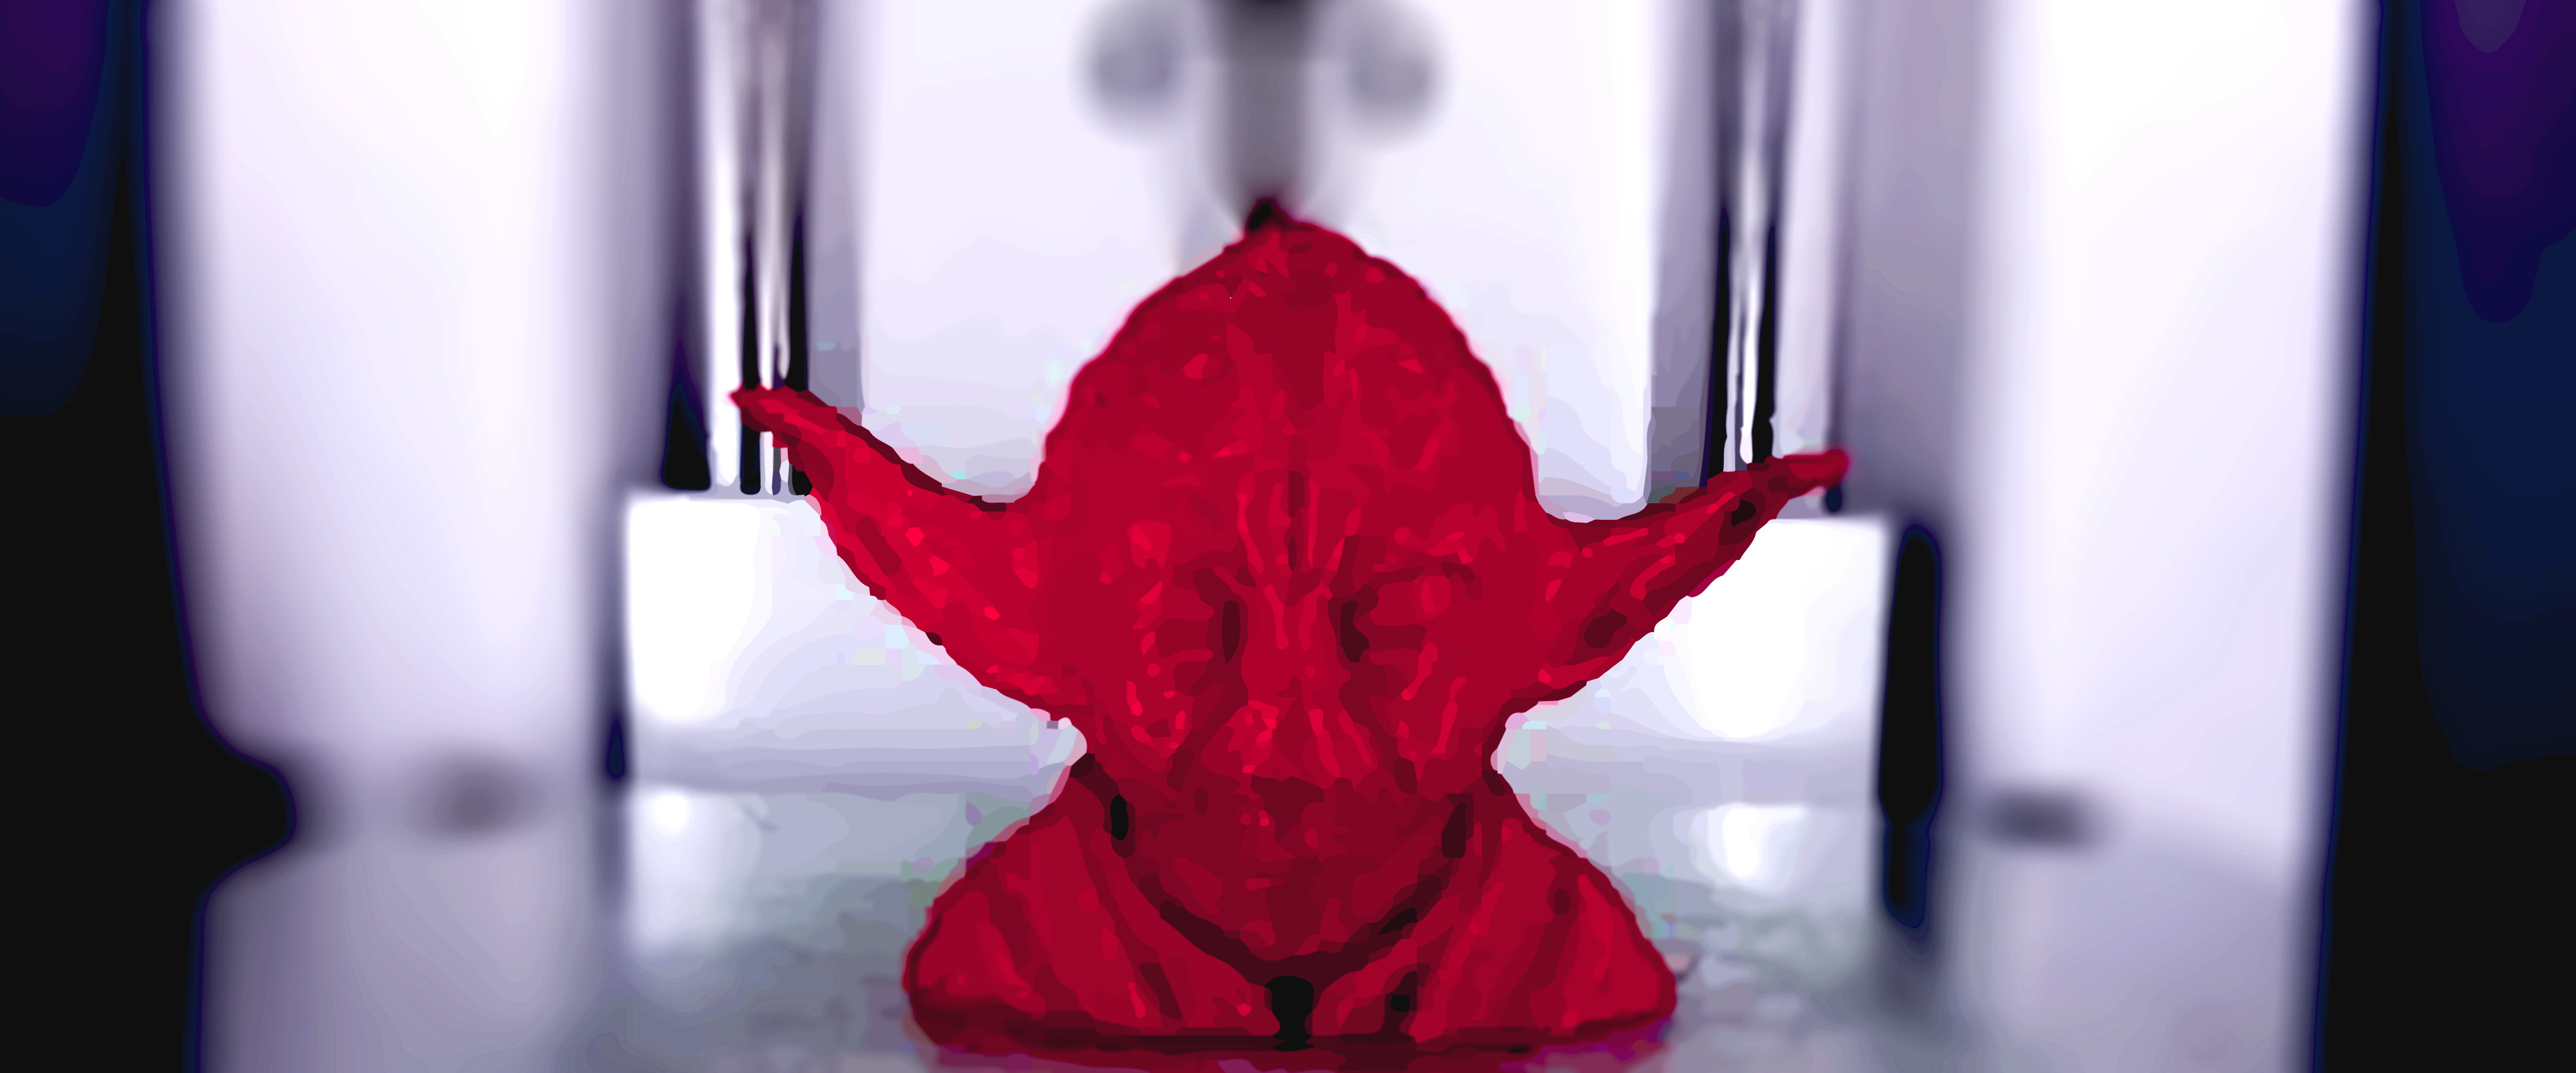 Impresión 3D: Crea tu "Cubo de Compañía" 1